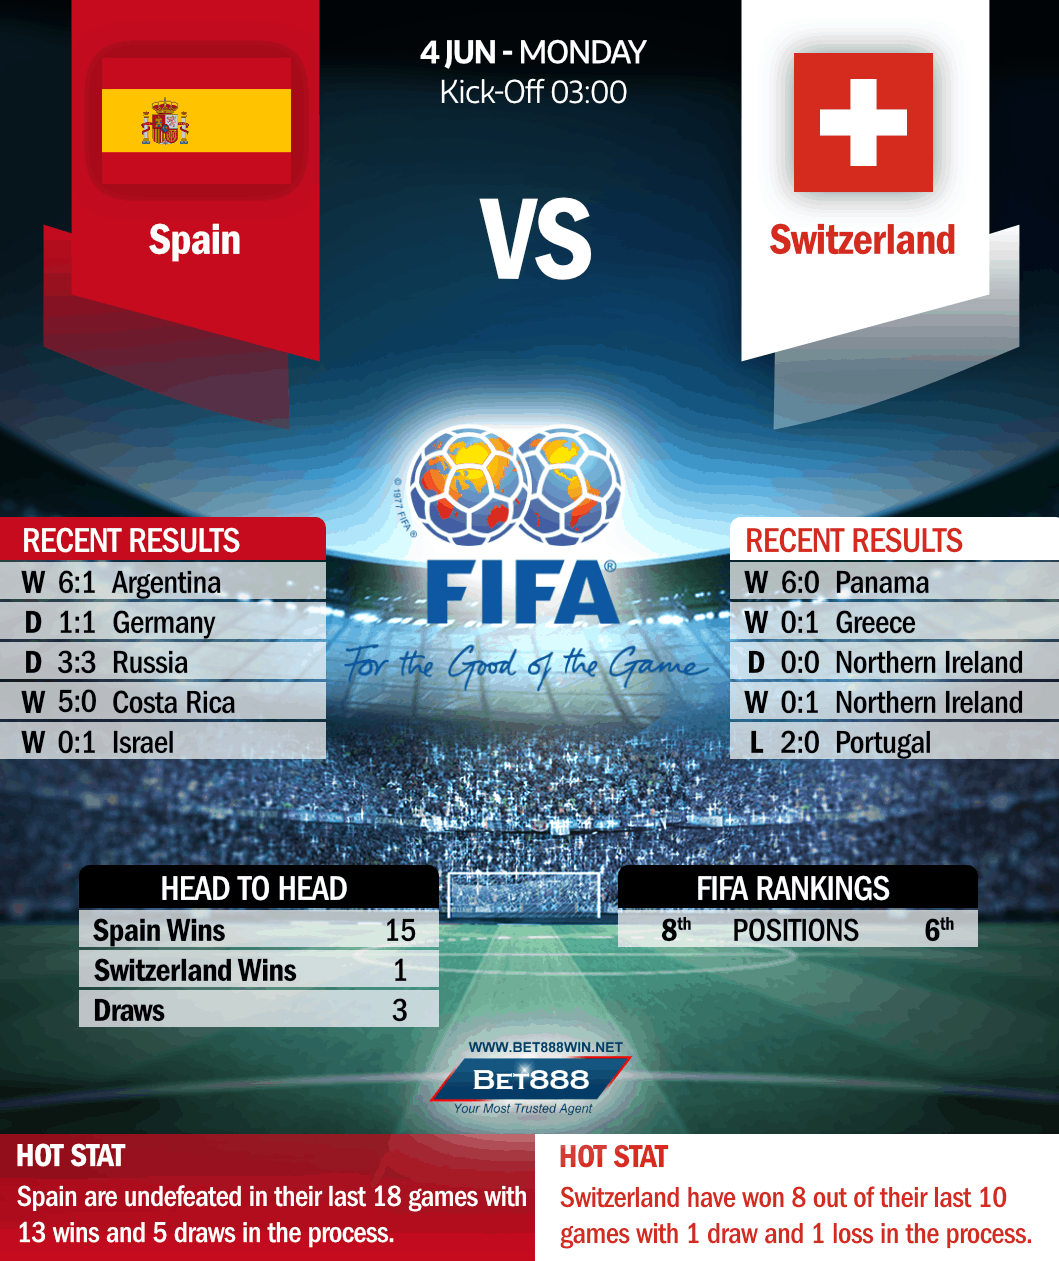 Spain vs Switzerland 04/06/18